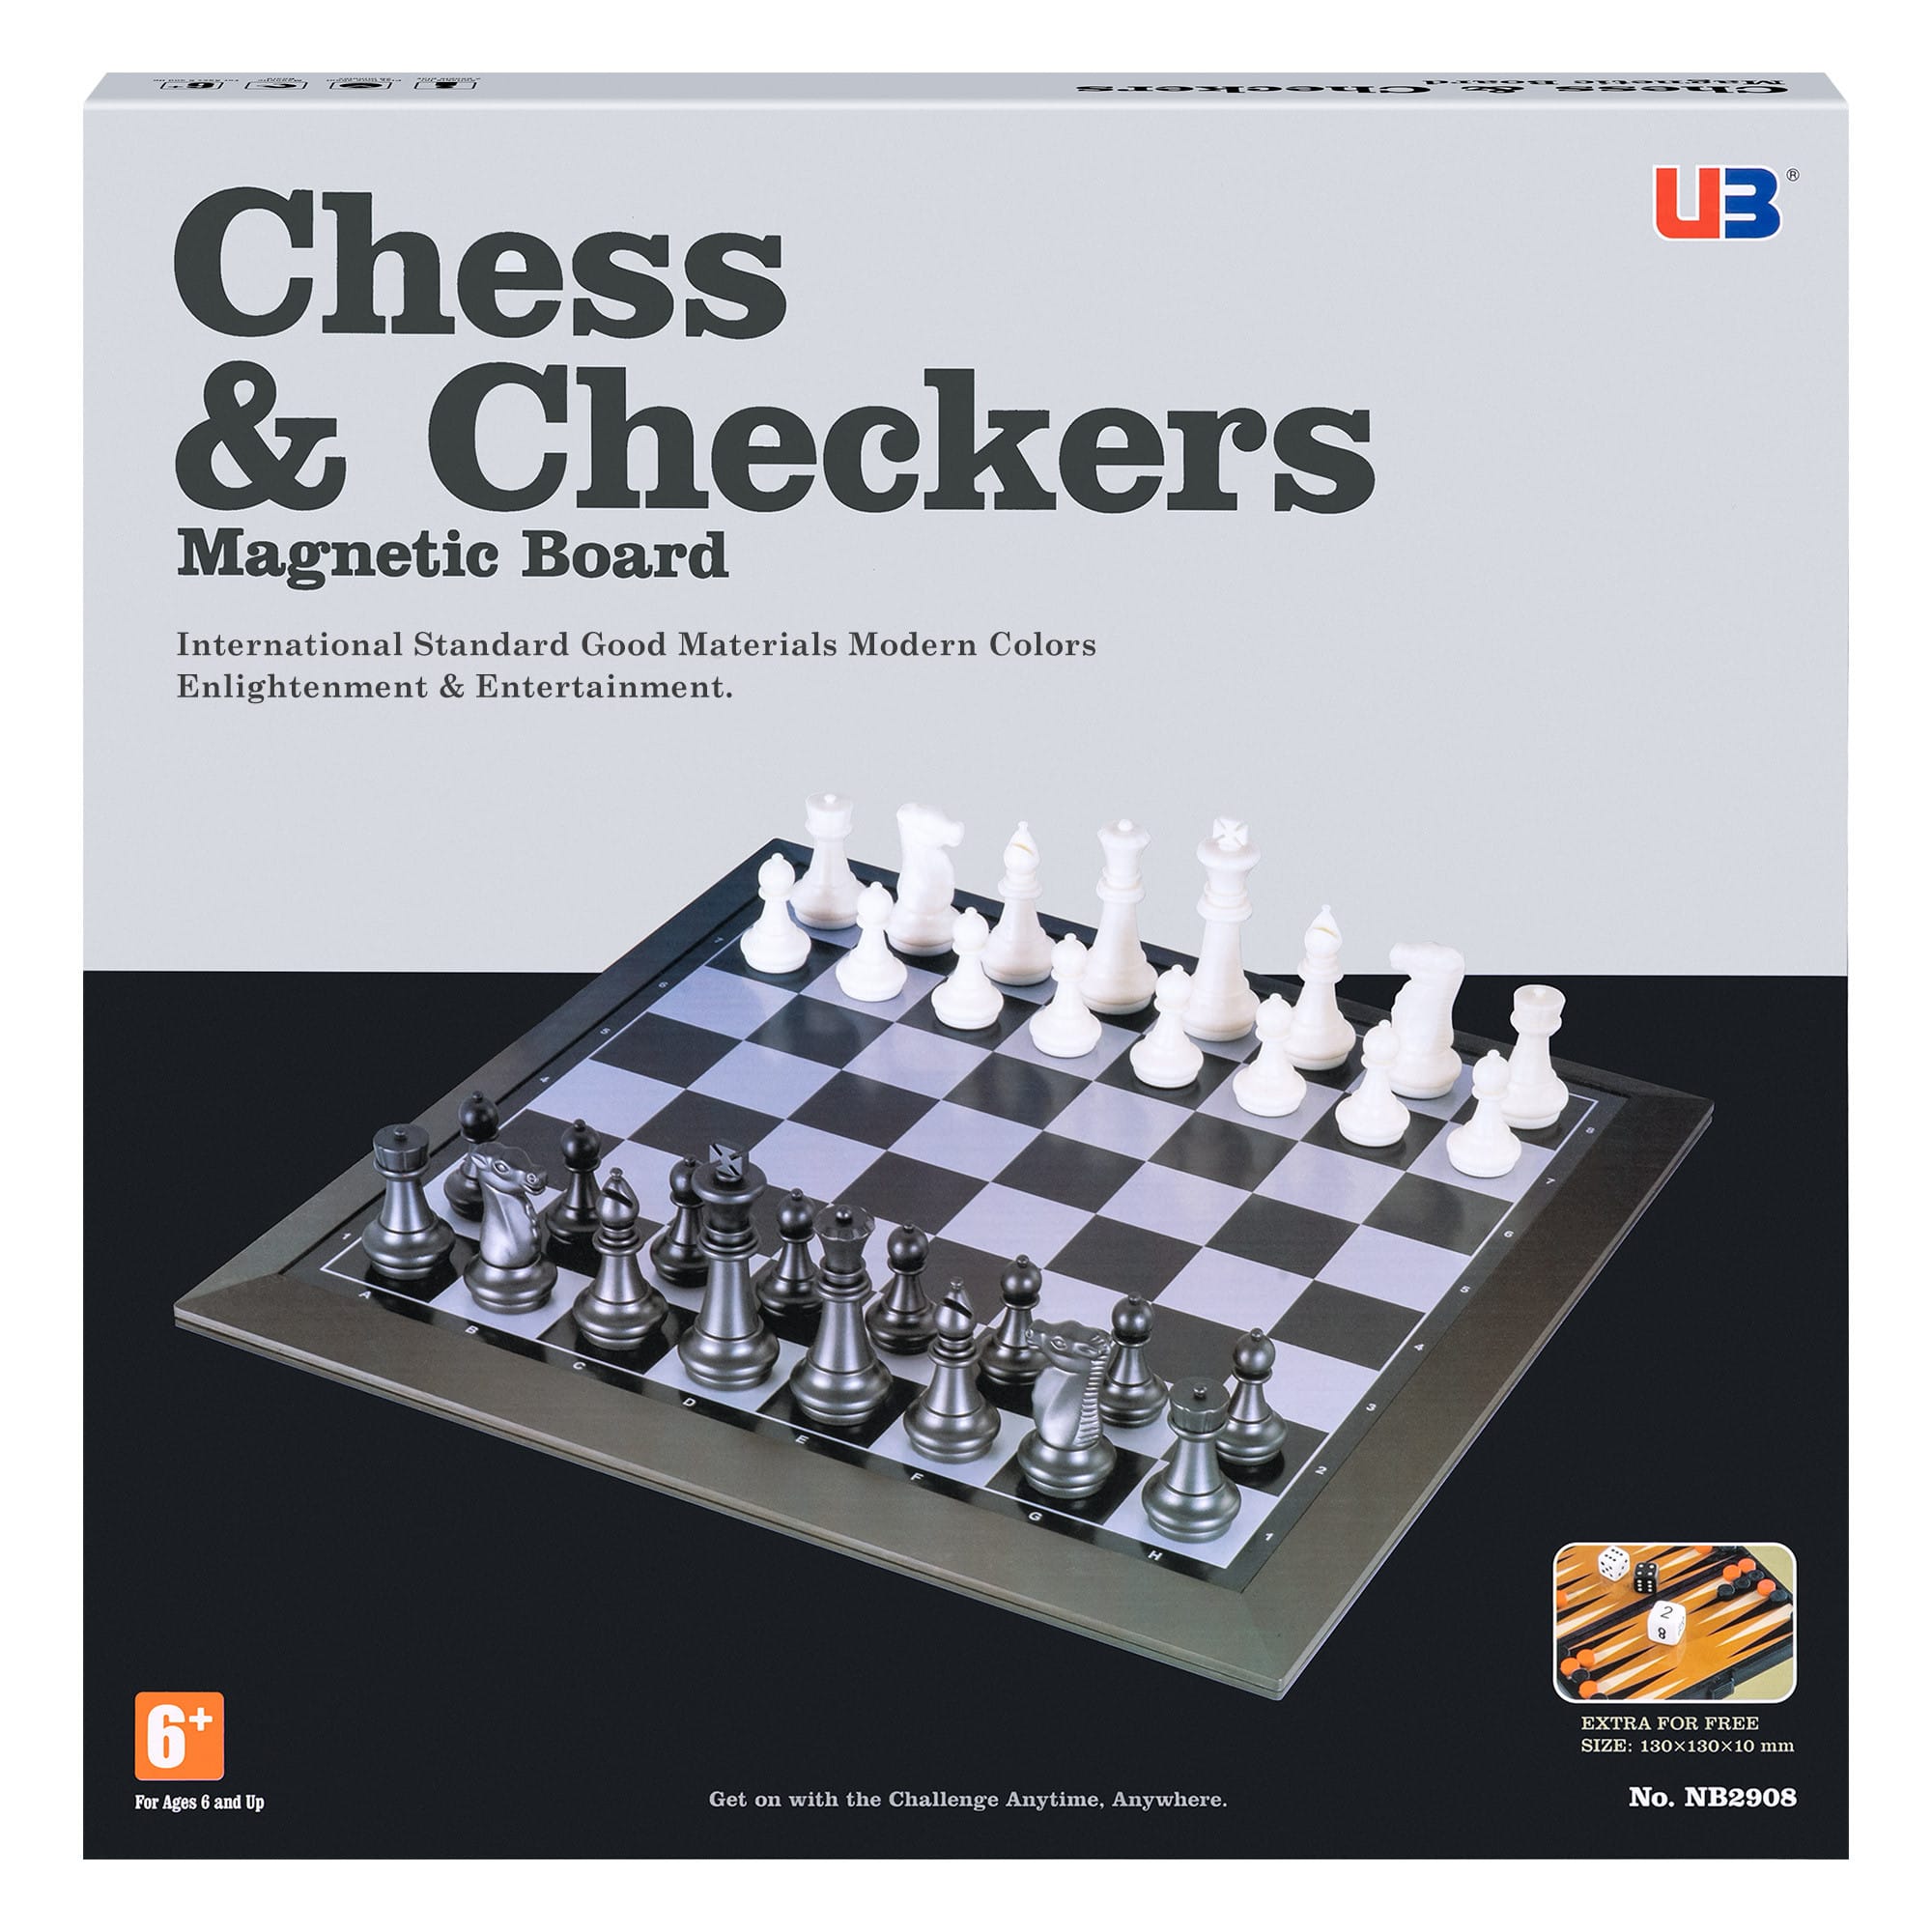 U3 - Magnetic Chess & Checkers Set - Modern